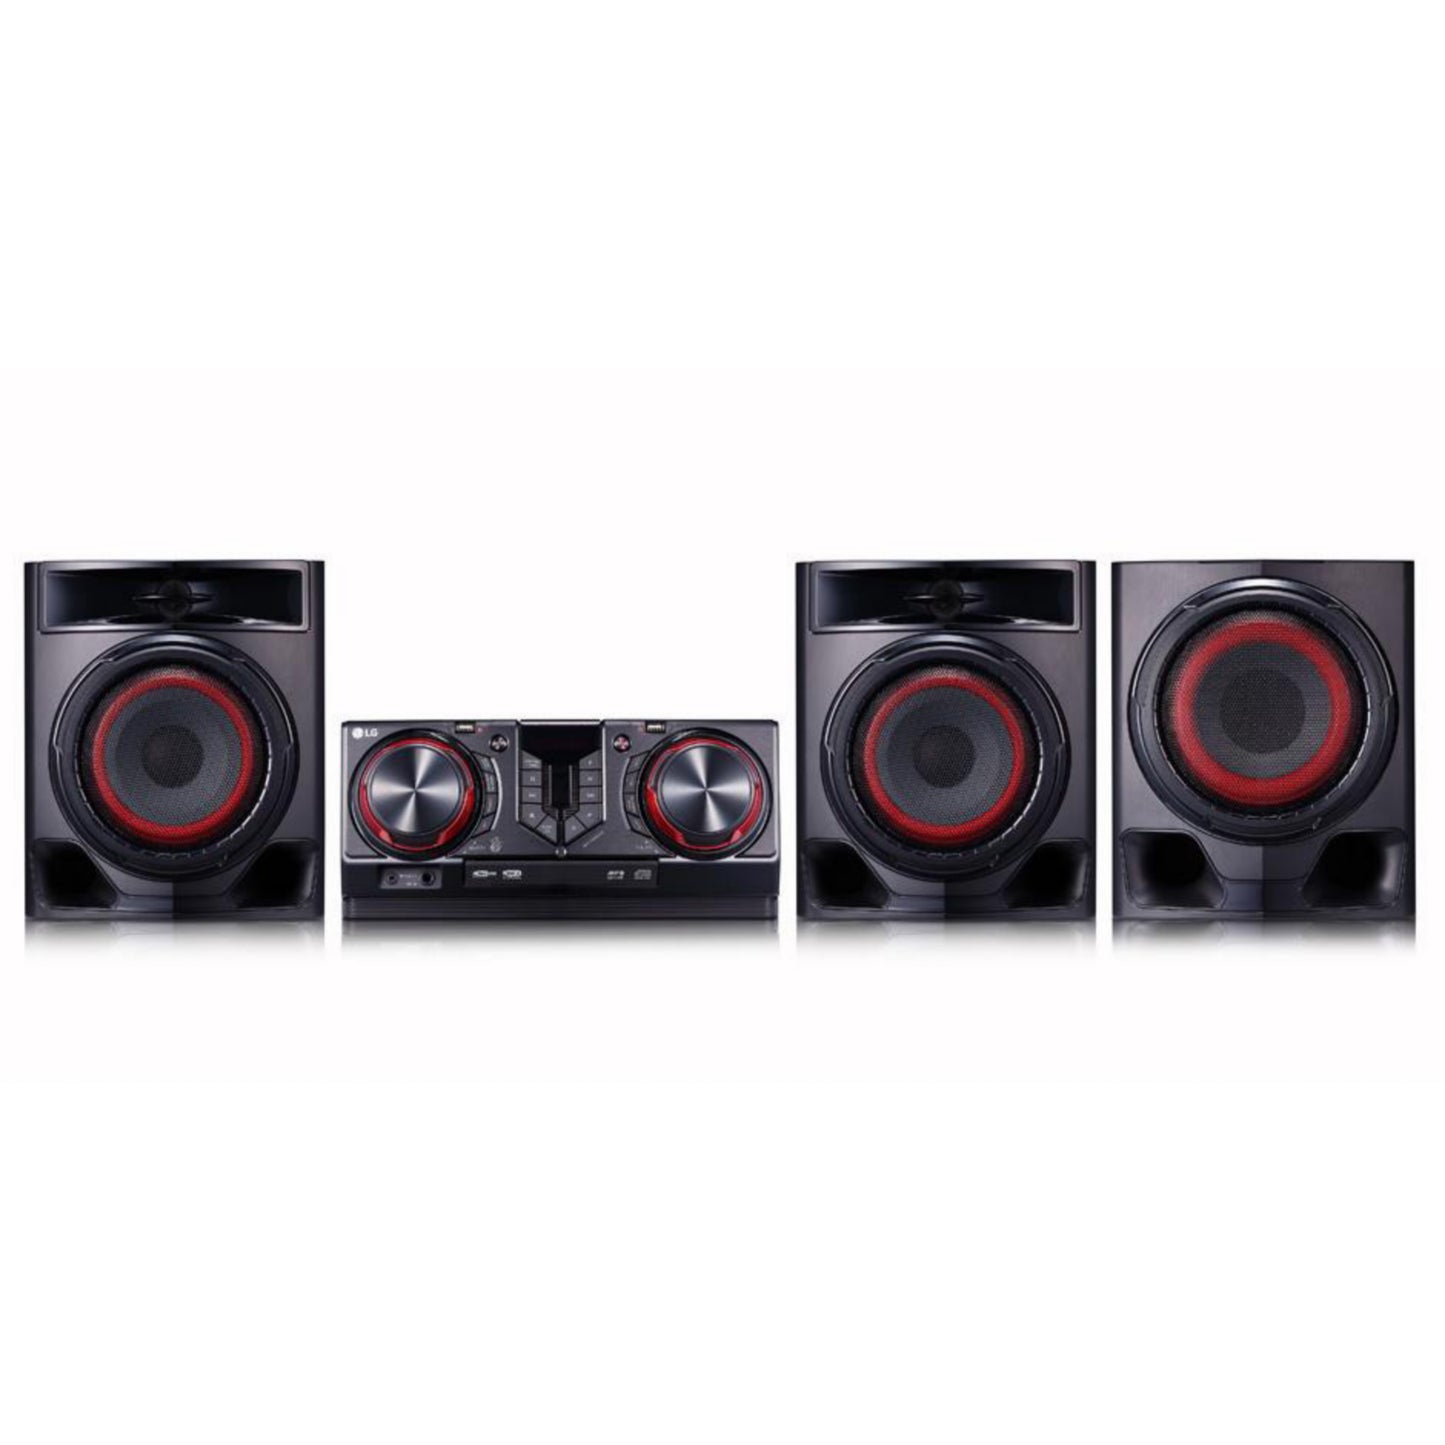 LG XBOOM CJ45 720W HiFi CD + Karaoke + Auto DJ Bluetooth Home Theater - Brand New